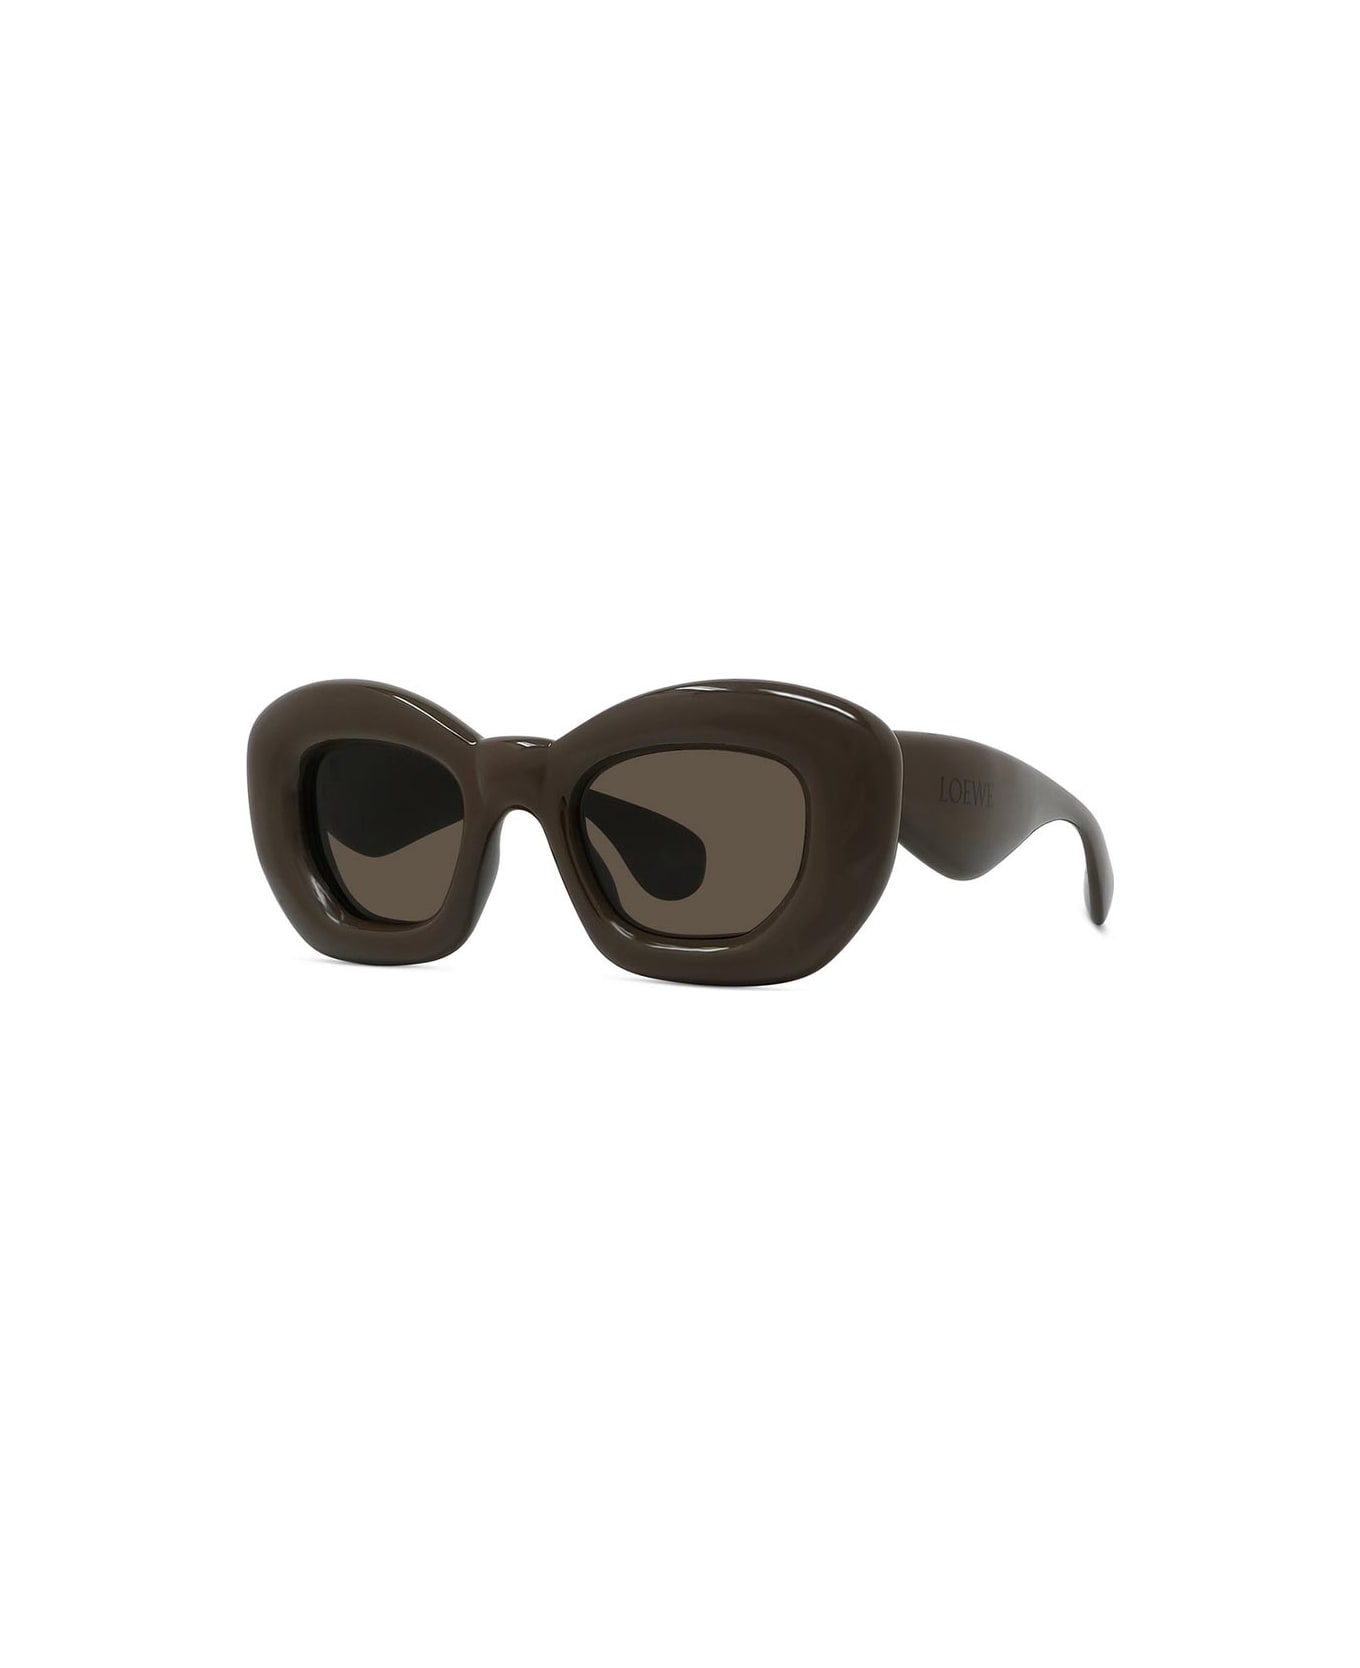 Loewe EYEWEAR Sunglasses - Marrone/Marrone